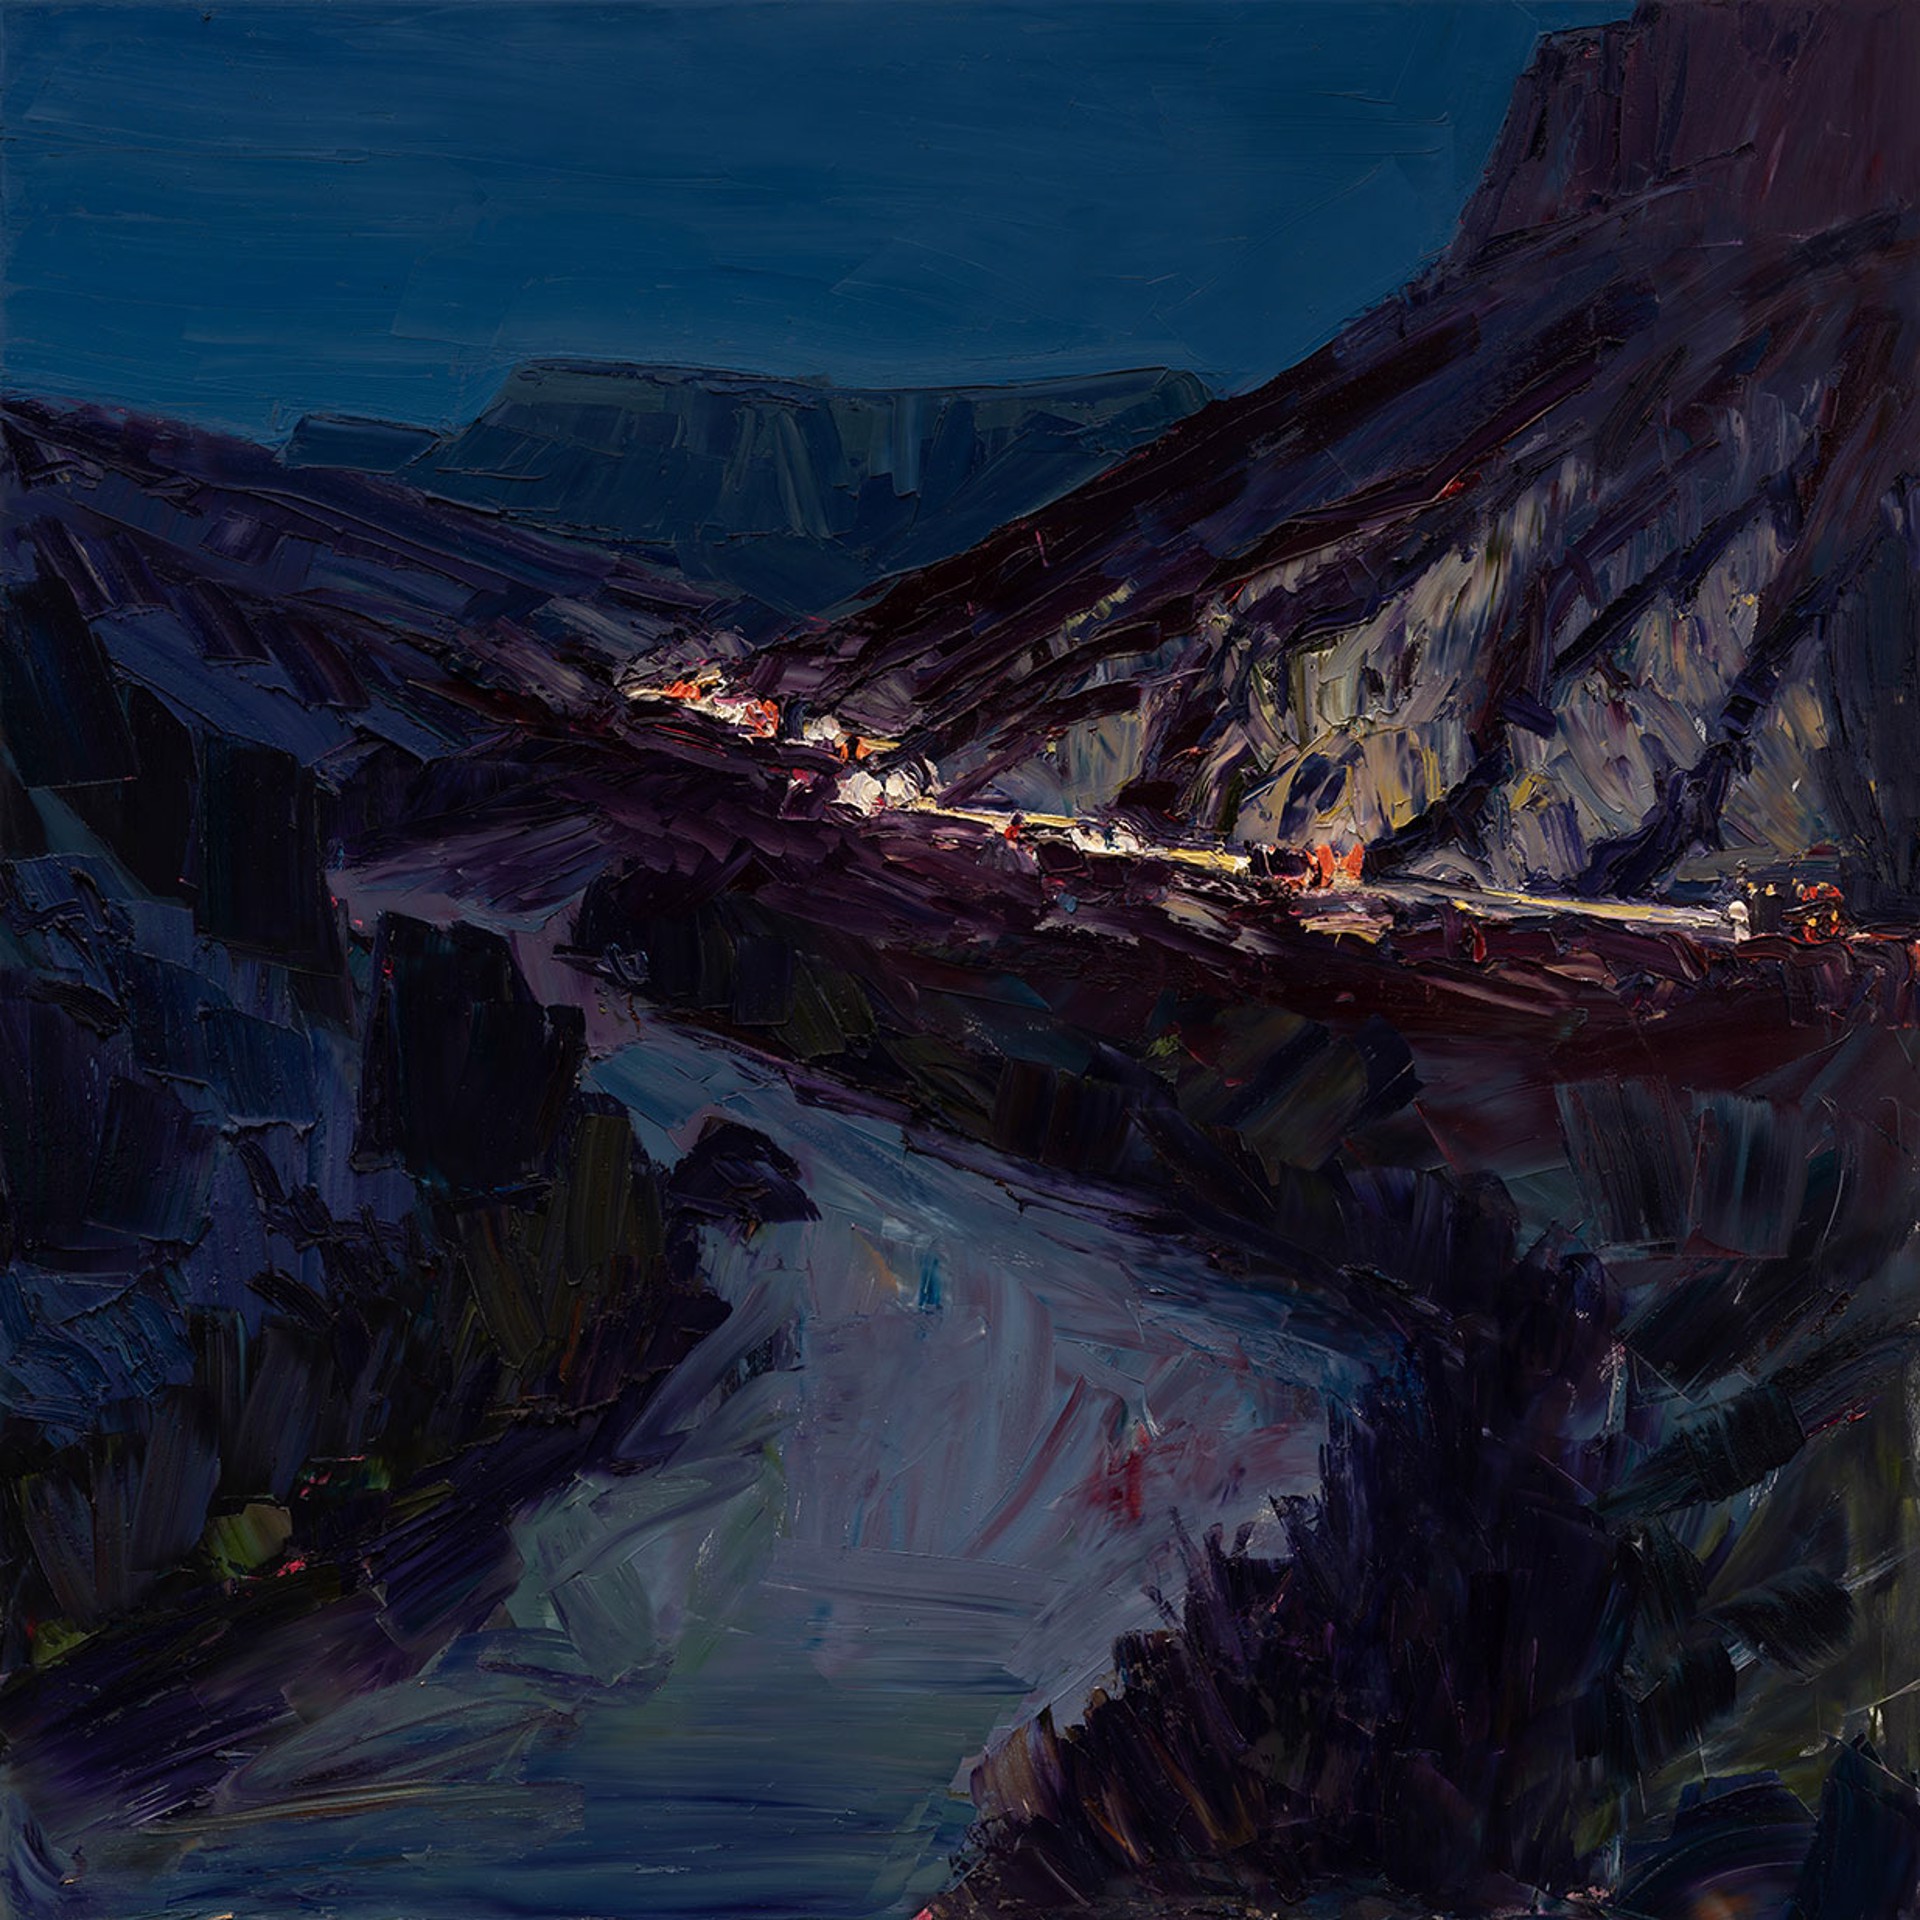 Riverbends - Winter #8 (Illuminated Gorge) by Jivan Lee